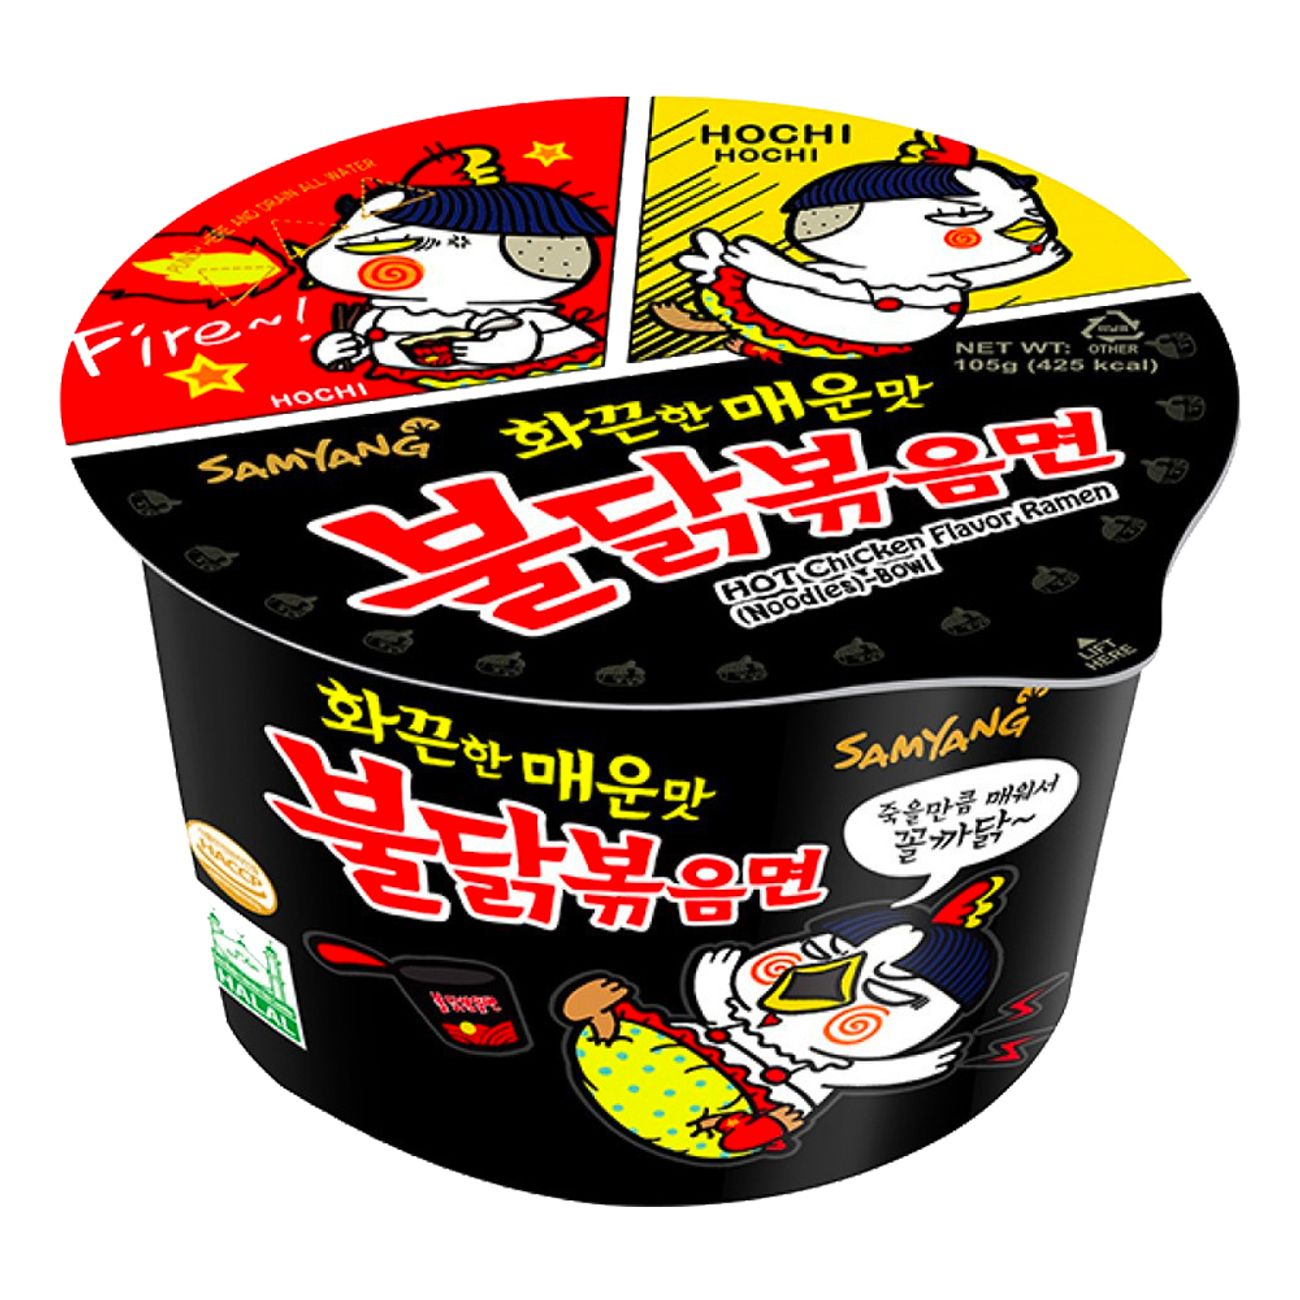 samyang-hot-chicken-ramen-orginal-91308-1